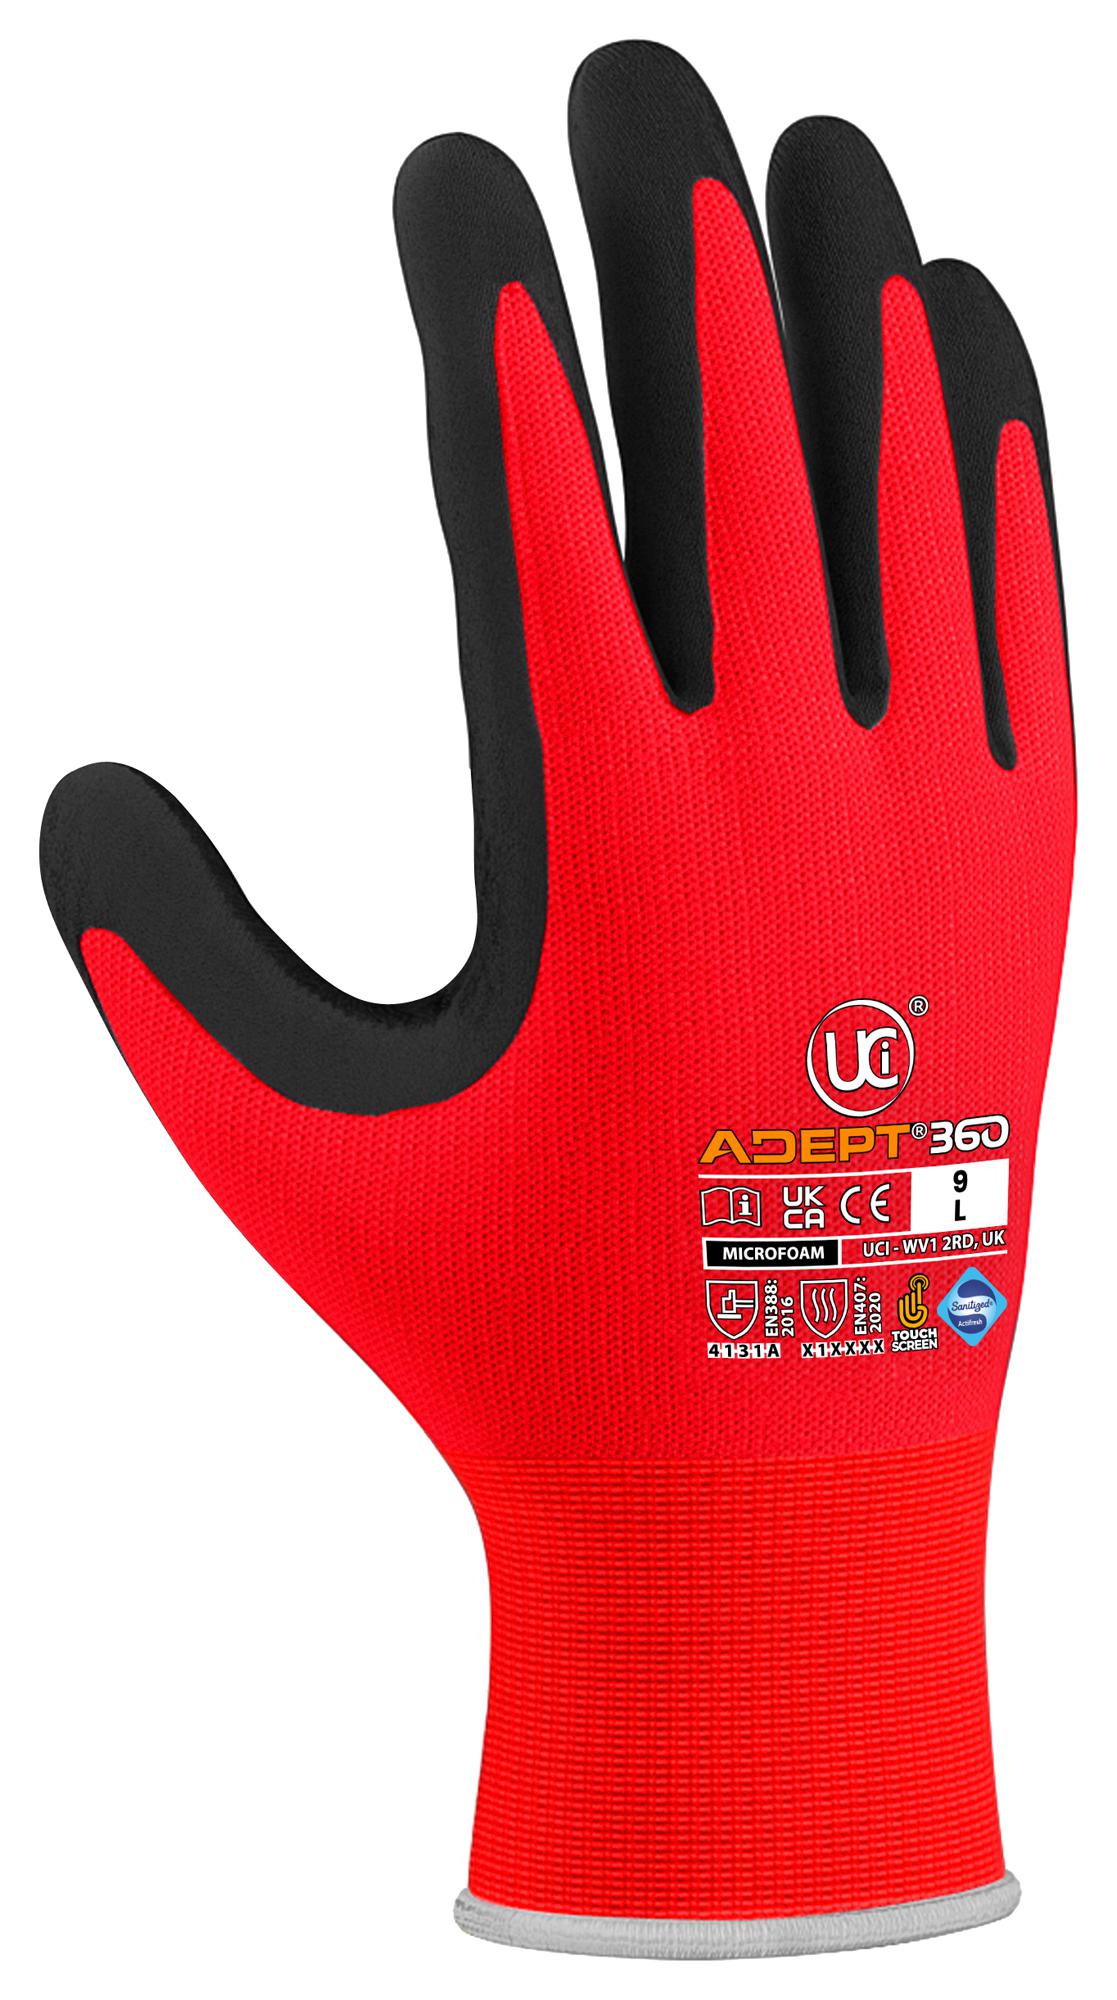 Uci G/adept360-Red/08 Gloves, Nylon/spandex, Red, M